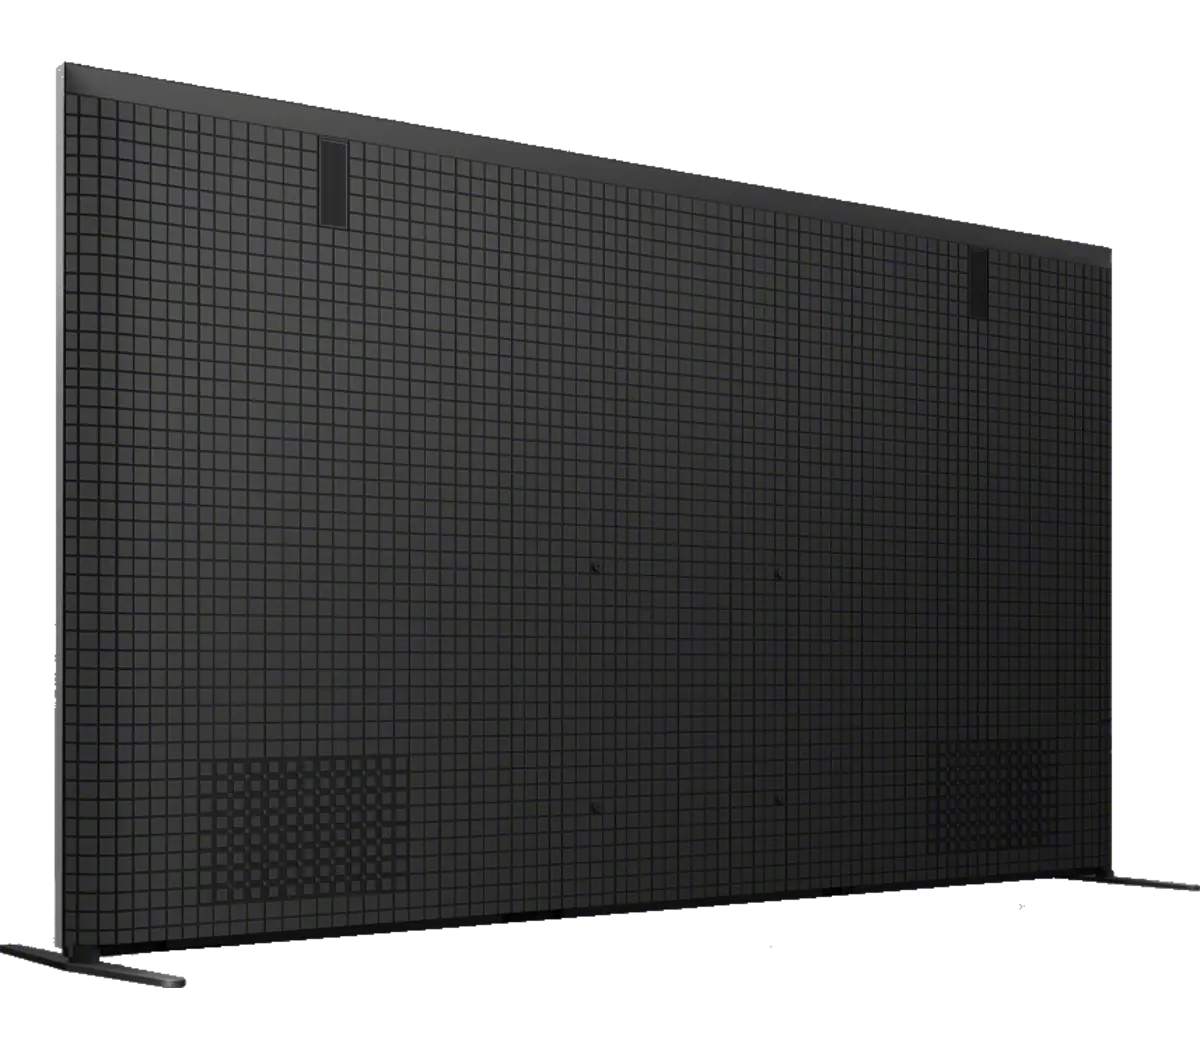 SONY BRAVIA 9 65” class Mini LED QLED 4K HDR Google TV (2024) K-65XR90